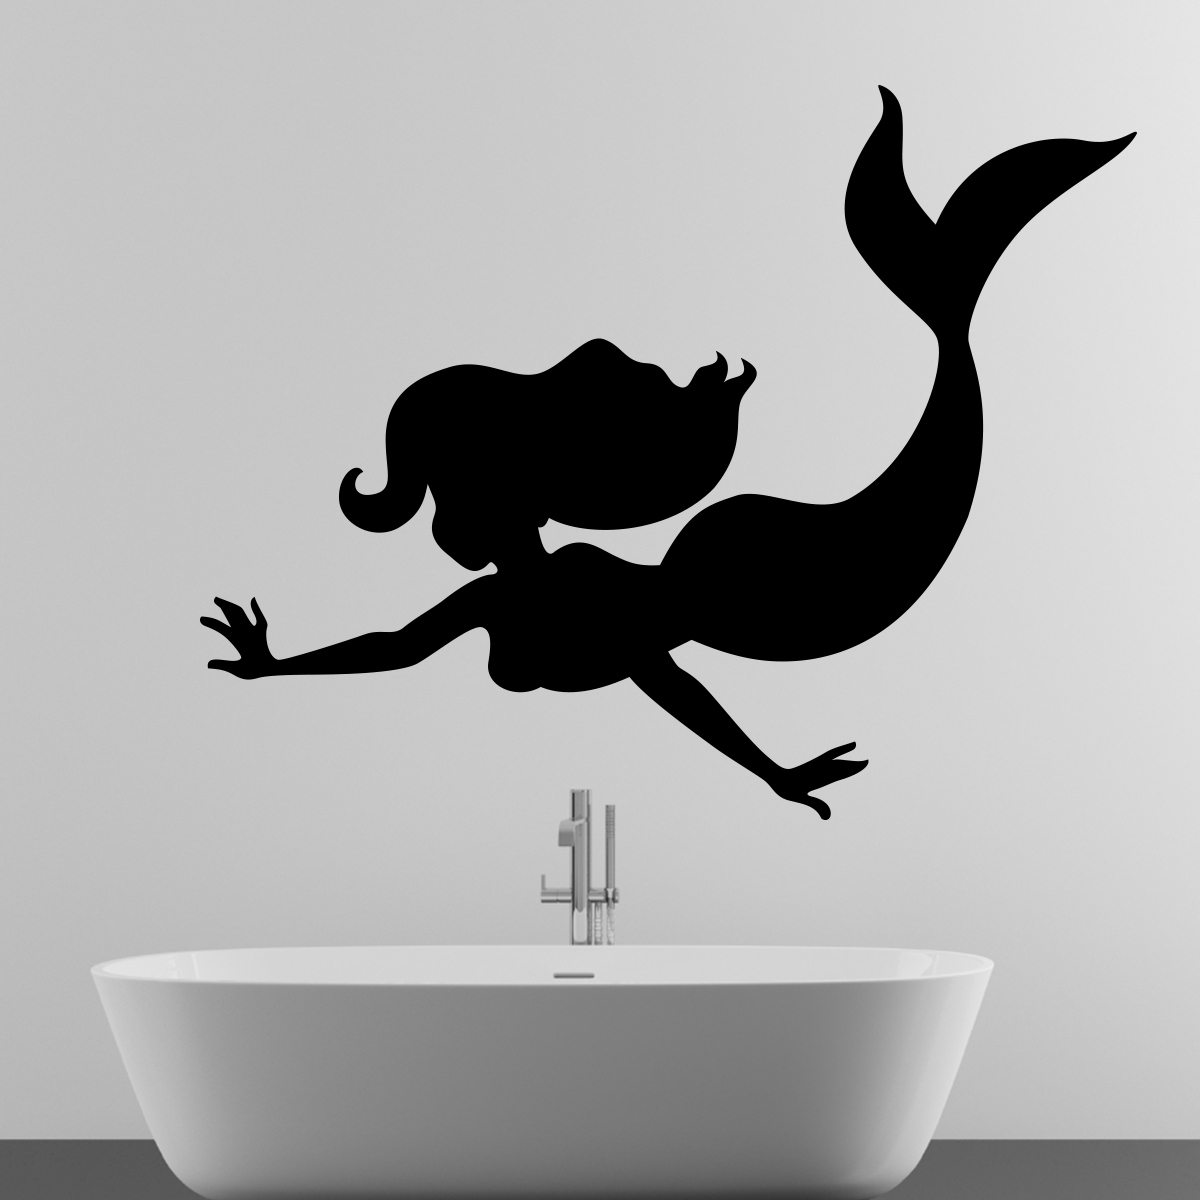 Sticker sirène salle de bain - Déco stickers muraux